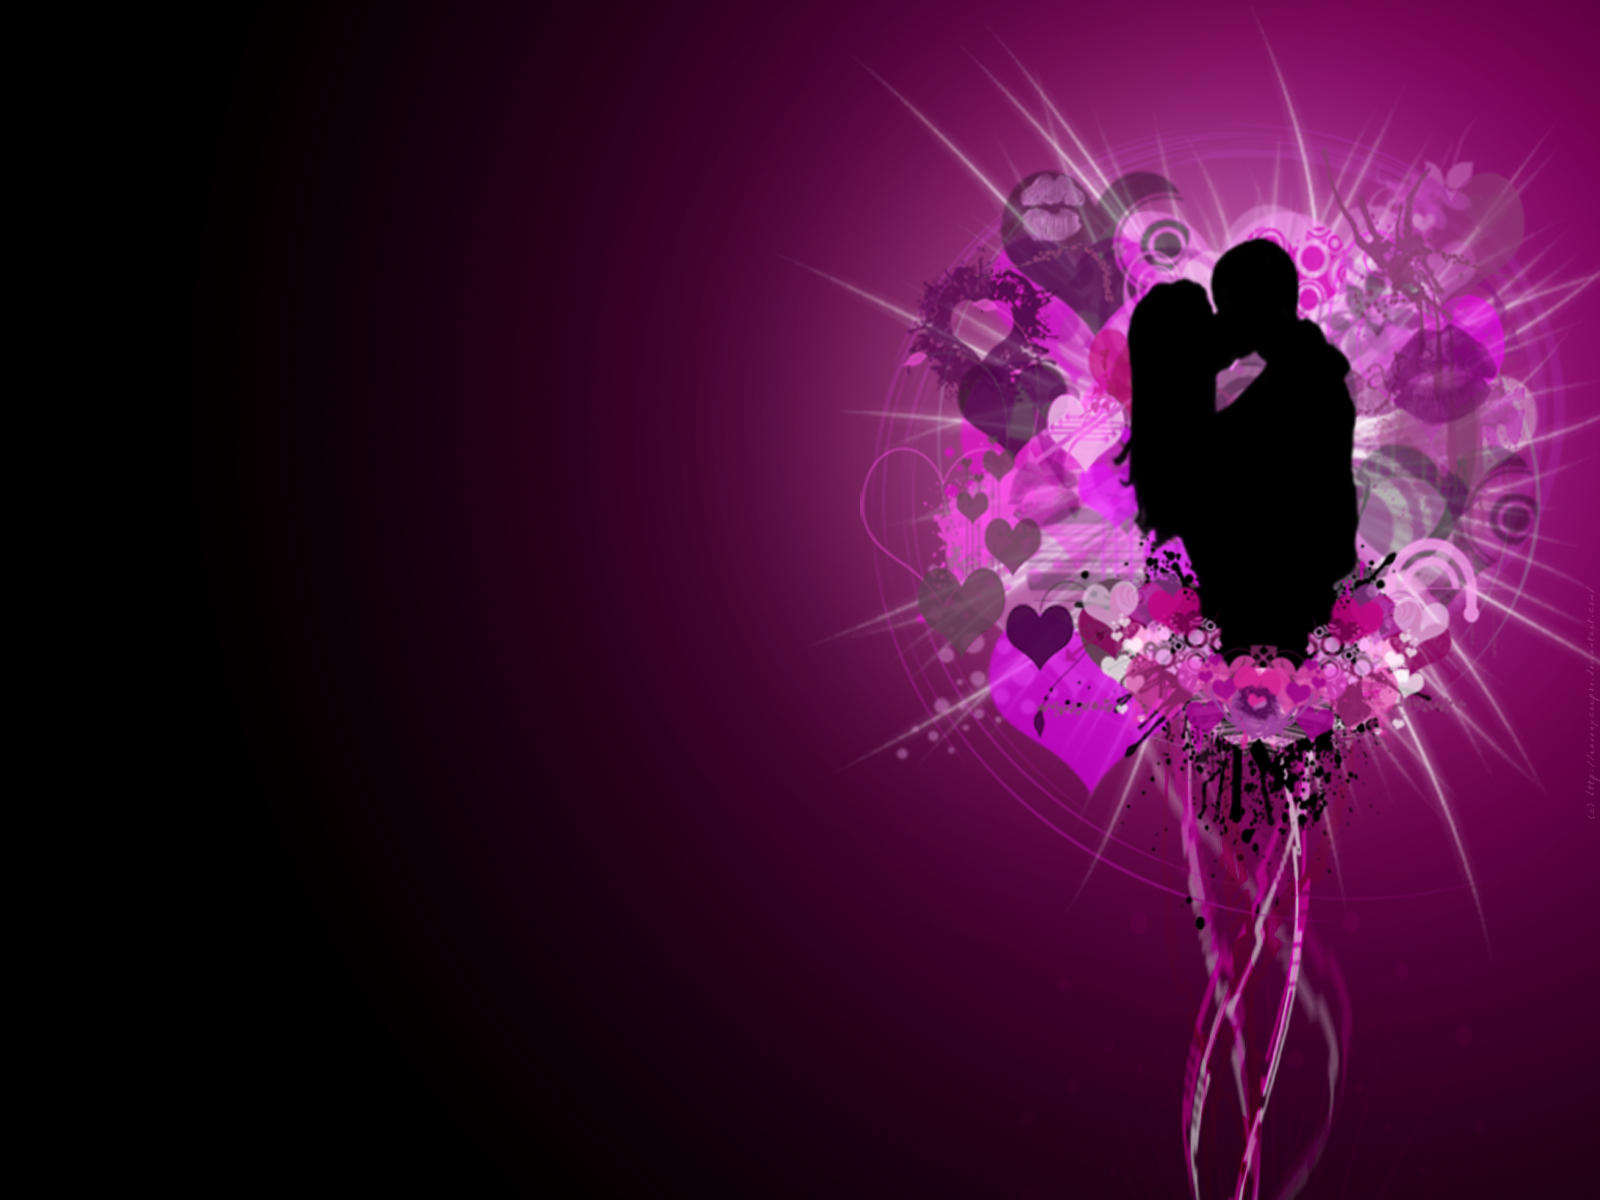 HD Romantic Love Screensaver Backgrounds   Ventubecom